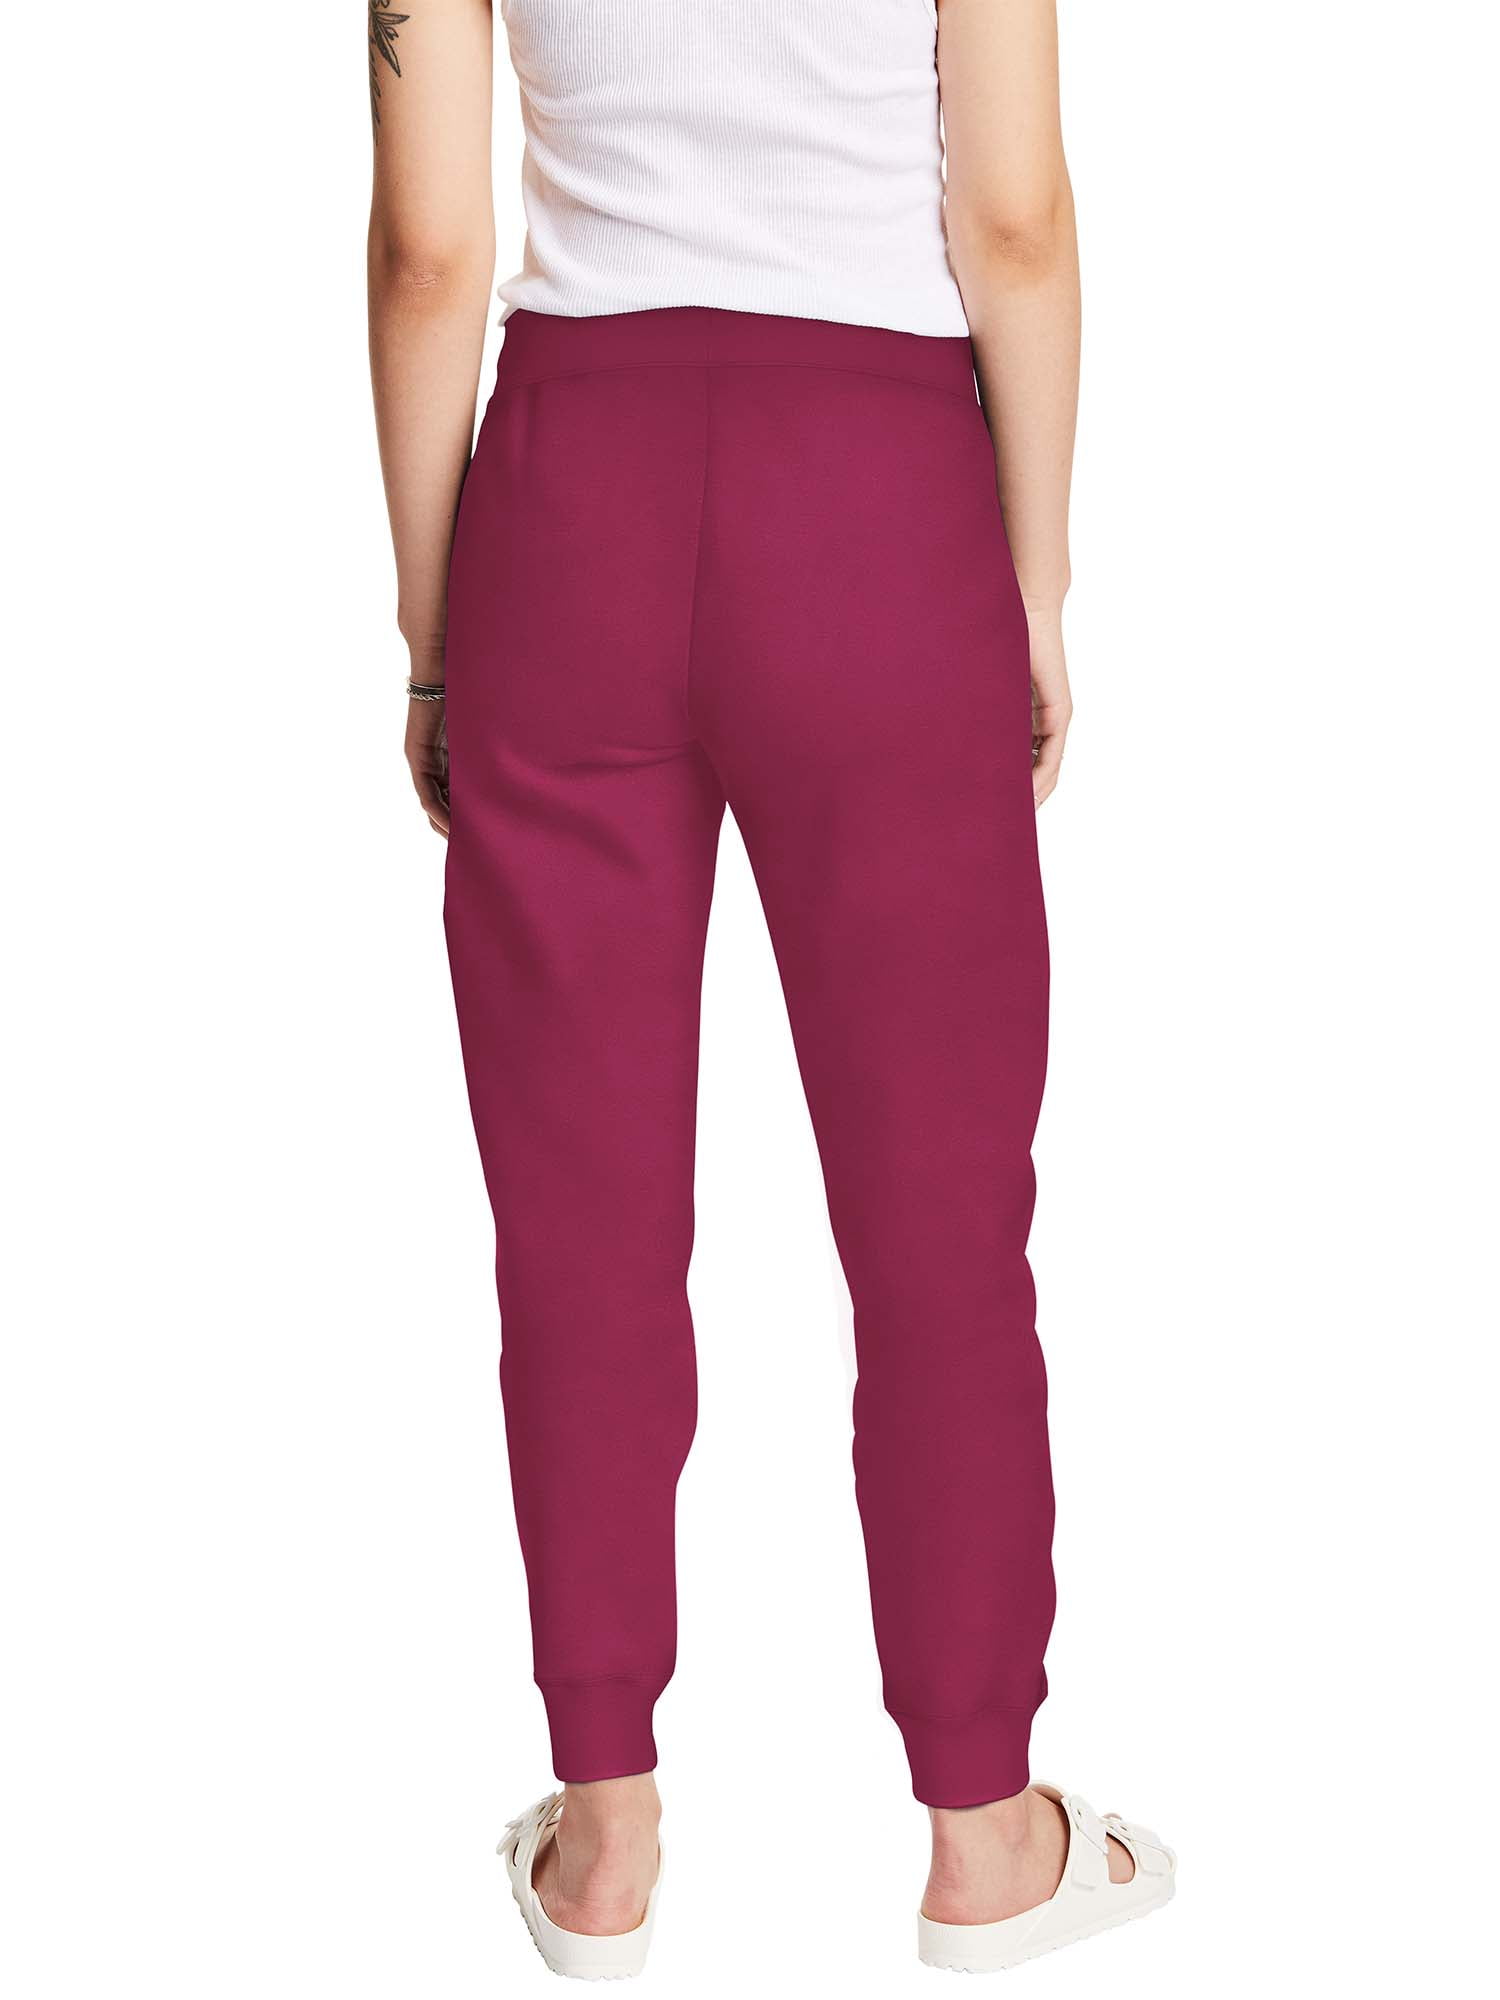 Hanes Women's EcoSmart Cotton-Blend Fleece Jogger Sweatpants 